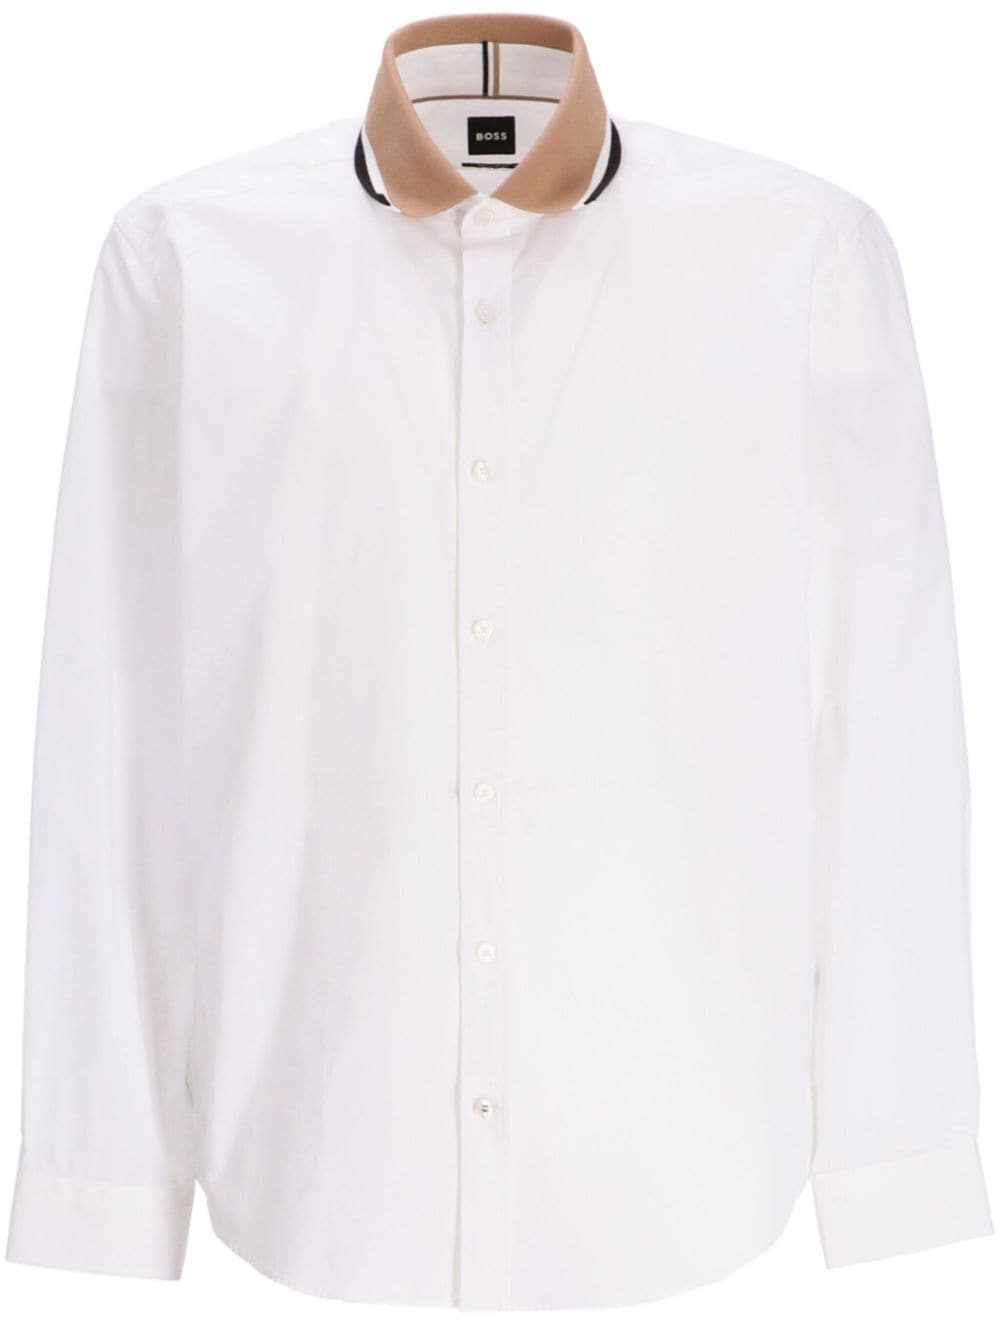 Hugo Boss S-liam Cotton Shirt In White